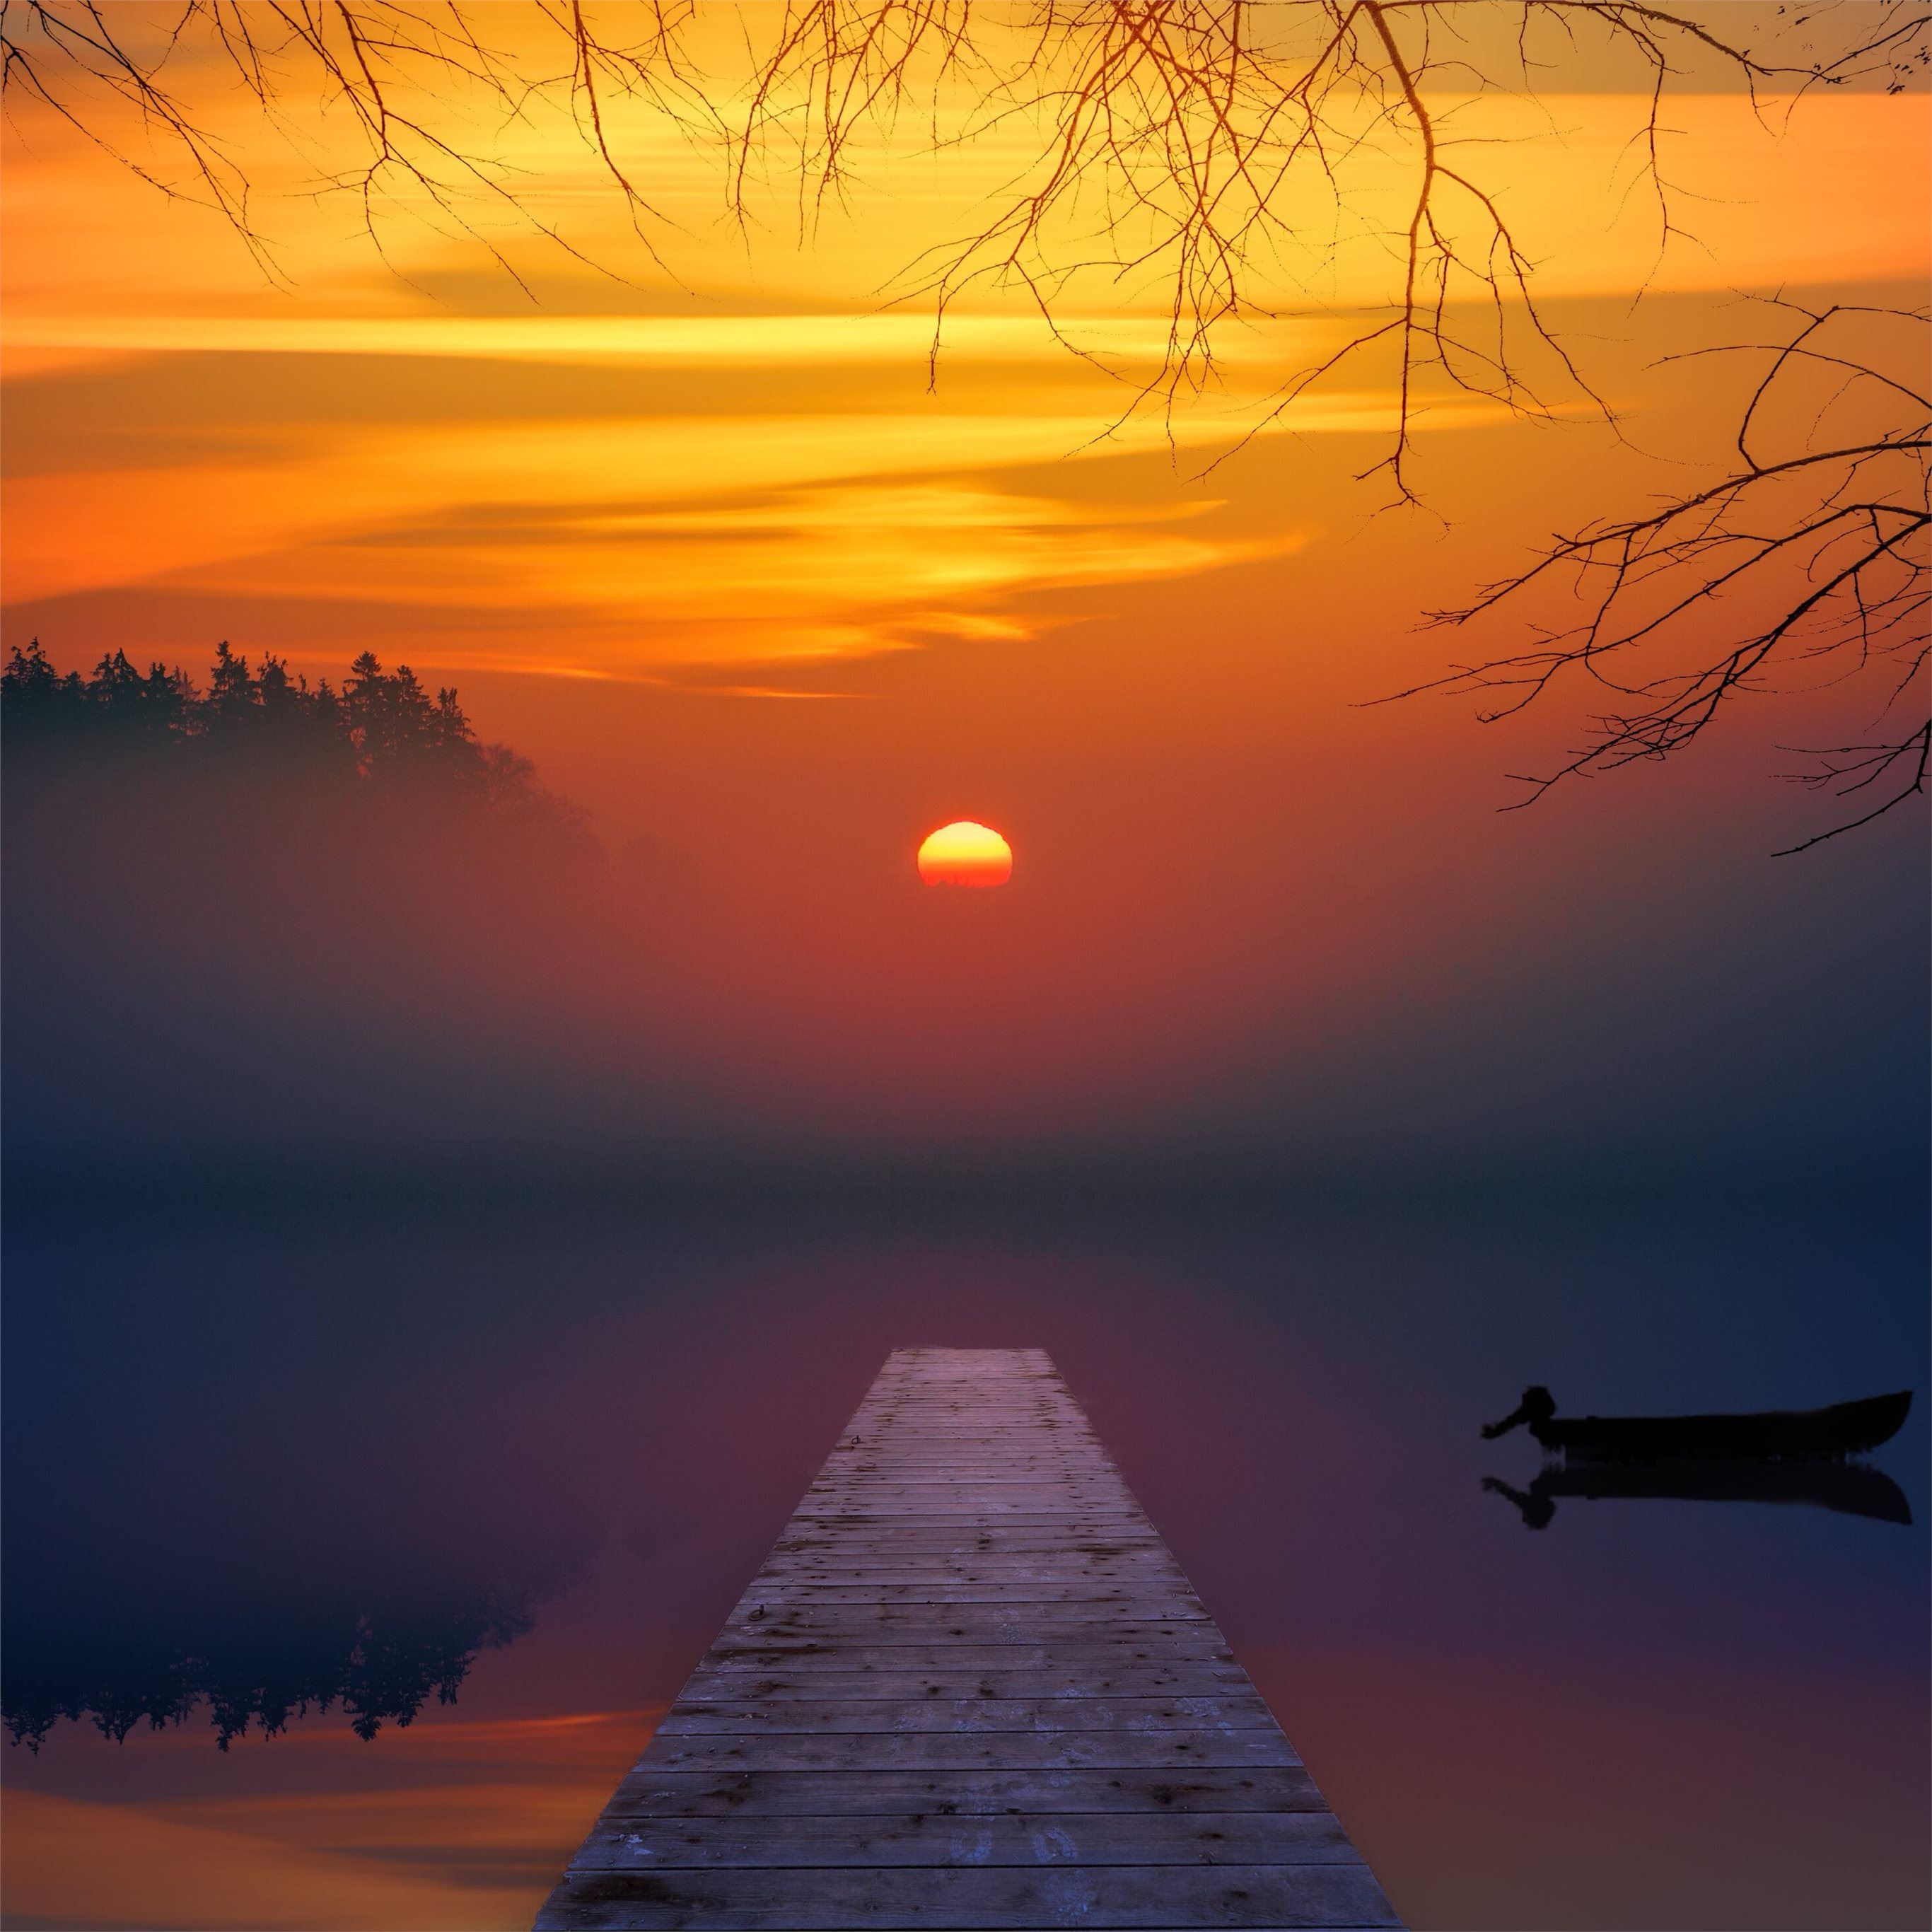 Lake Sunset Reflection 5k Ipad Pro Wallpapers Free Download